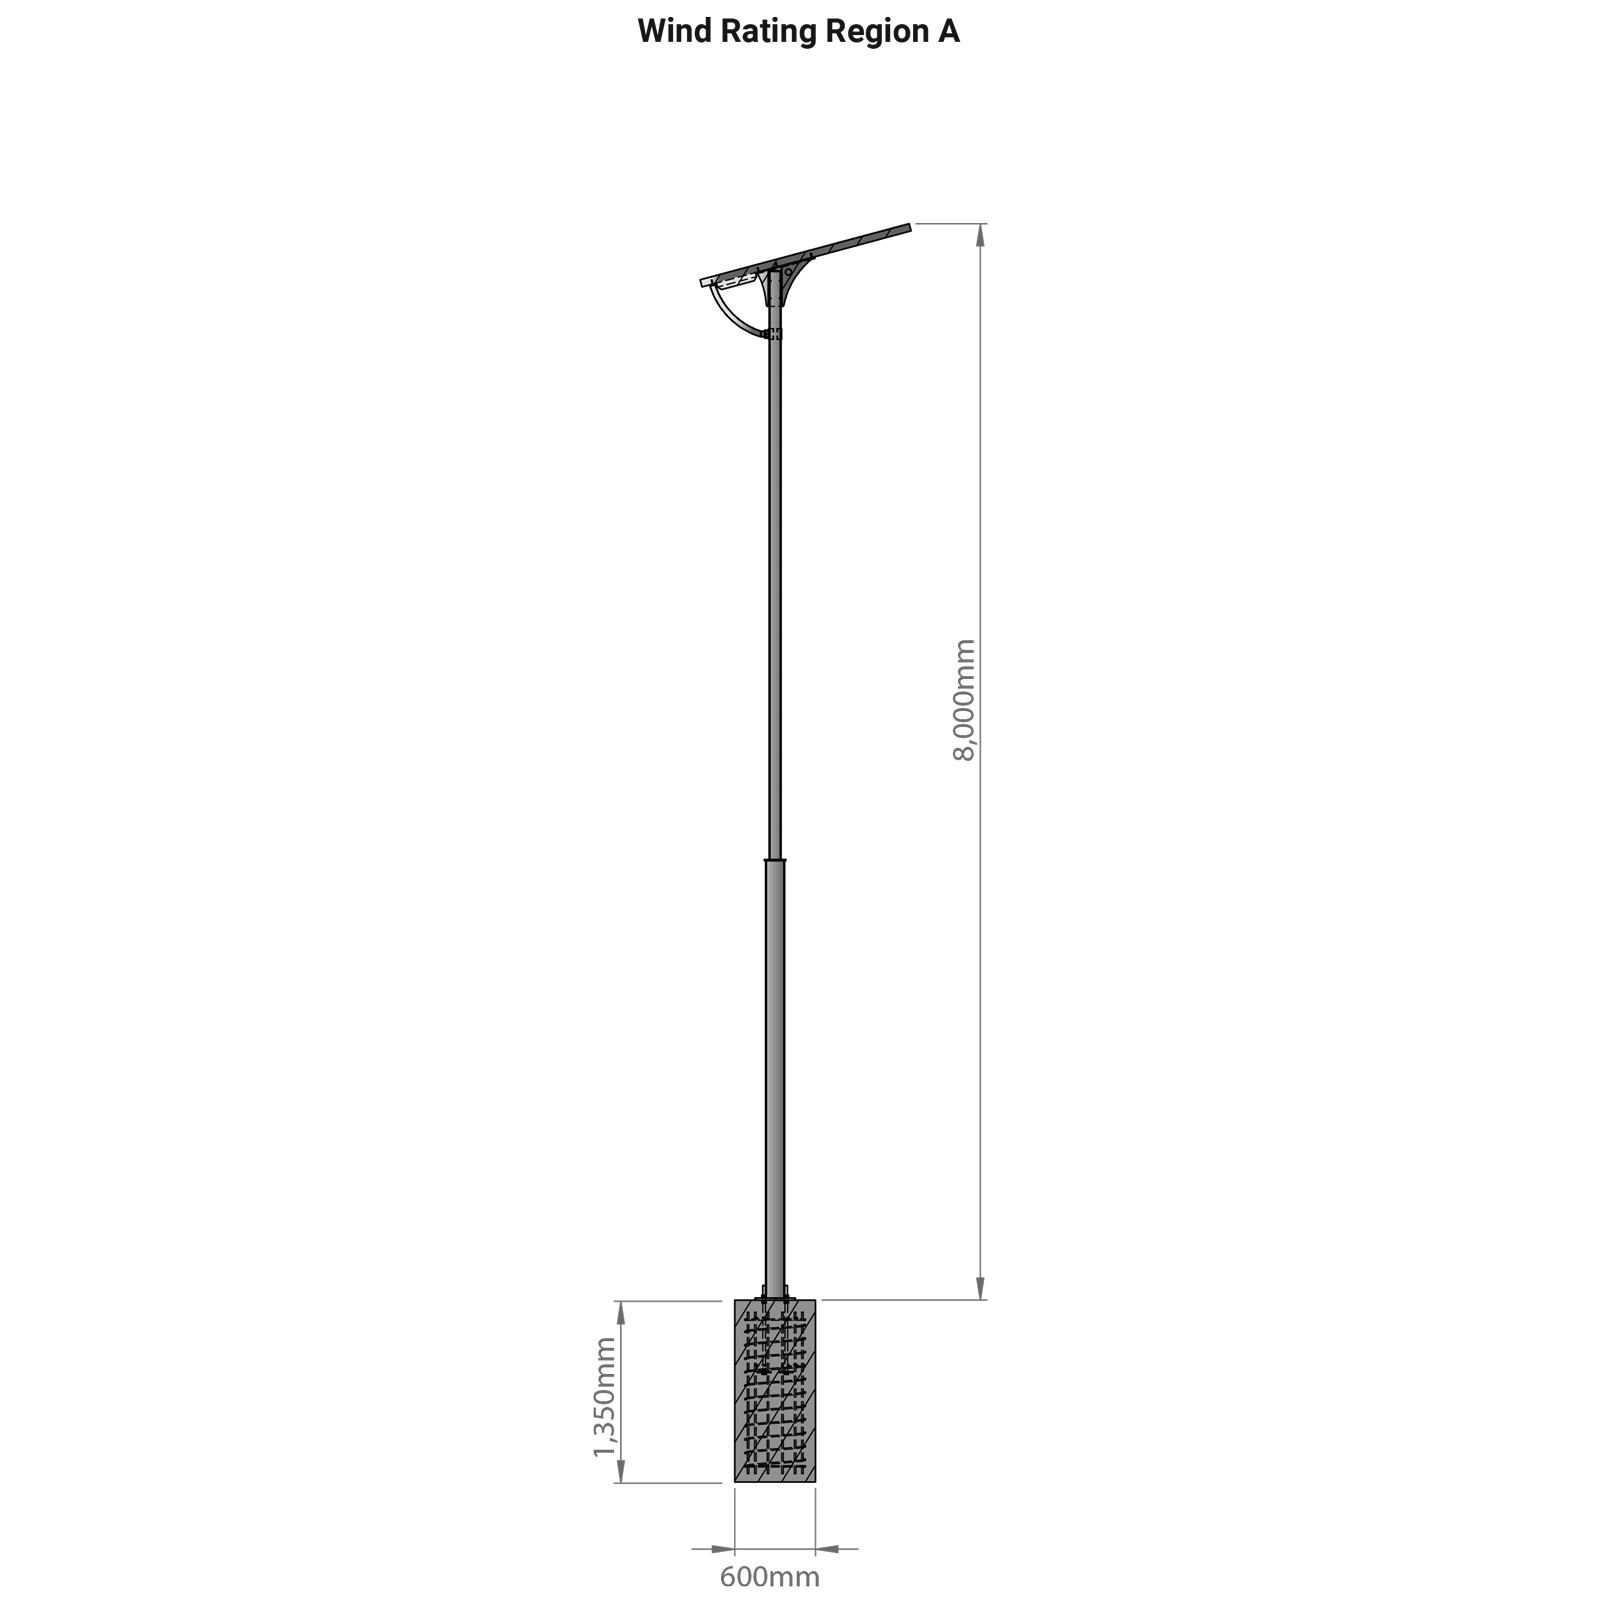 Solar Street Lighting Pole